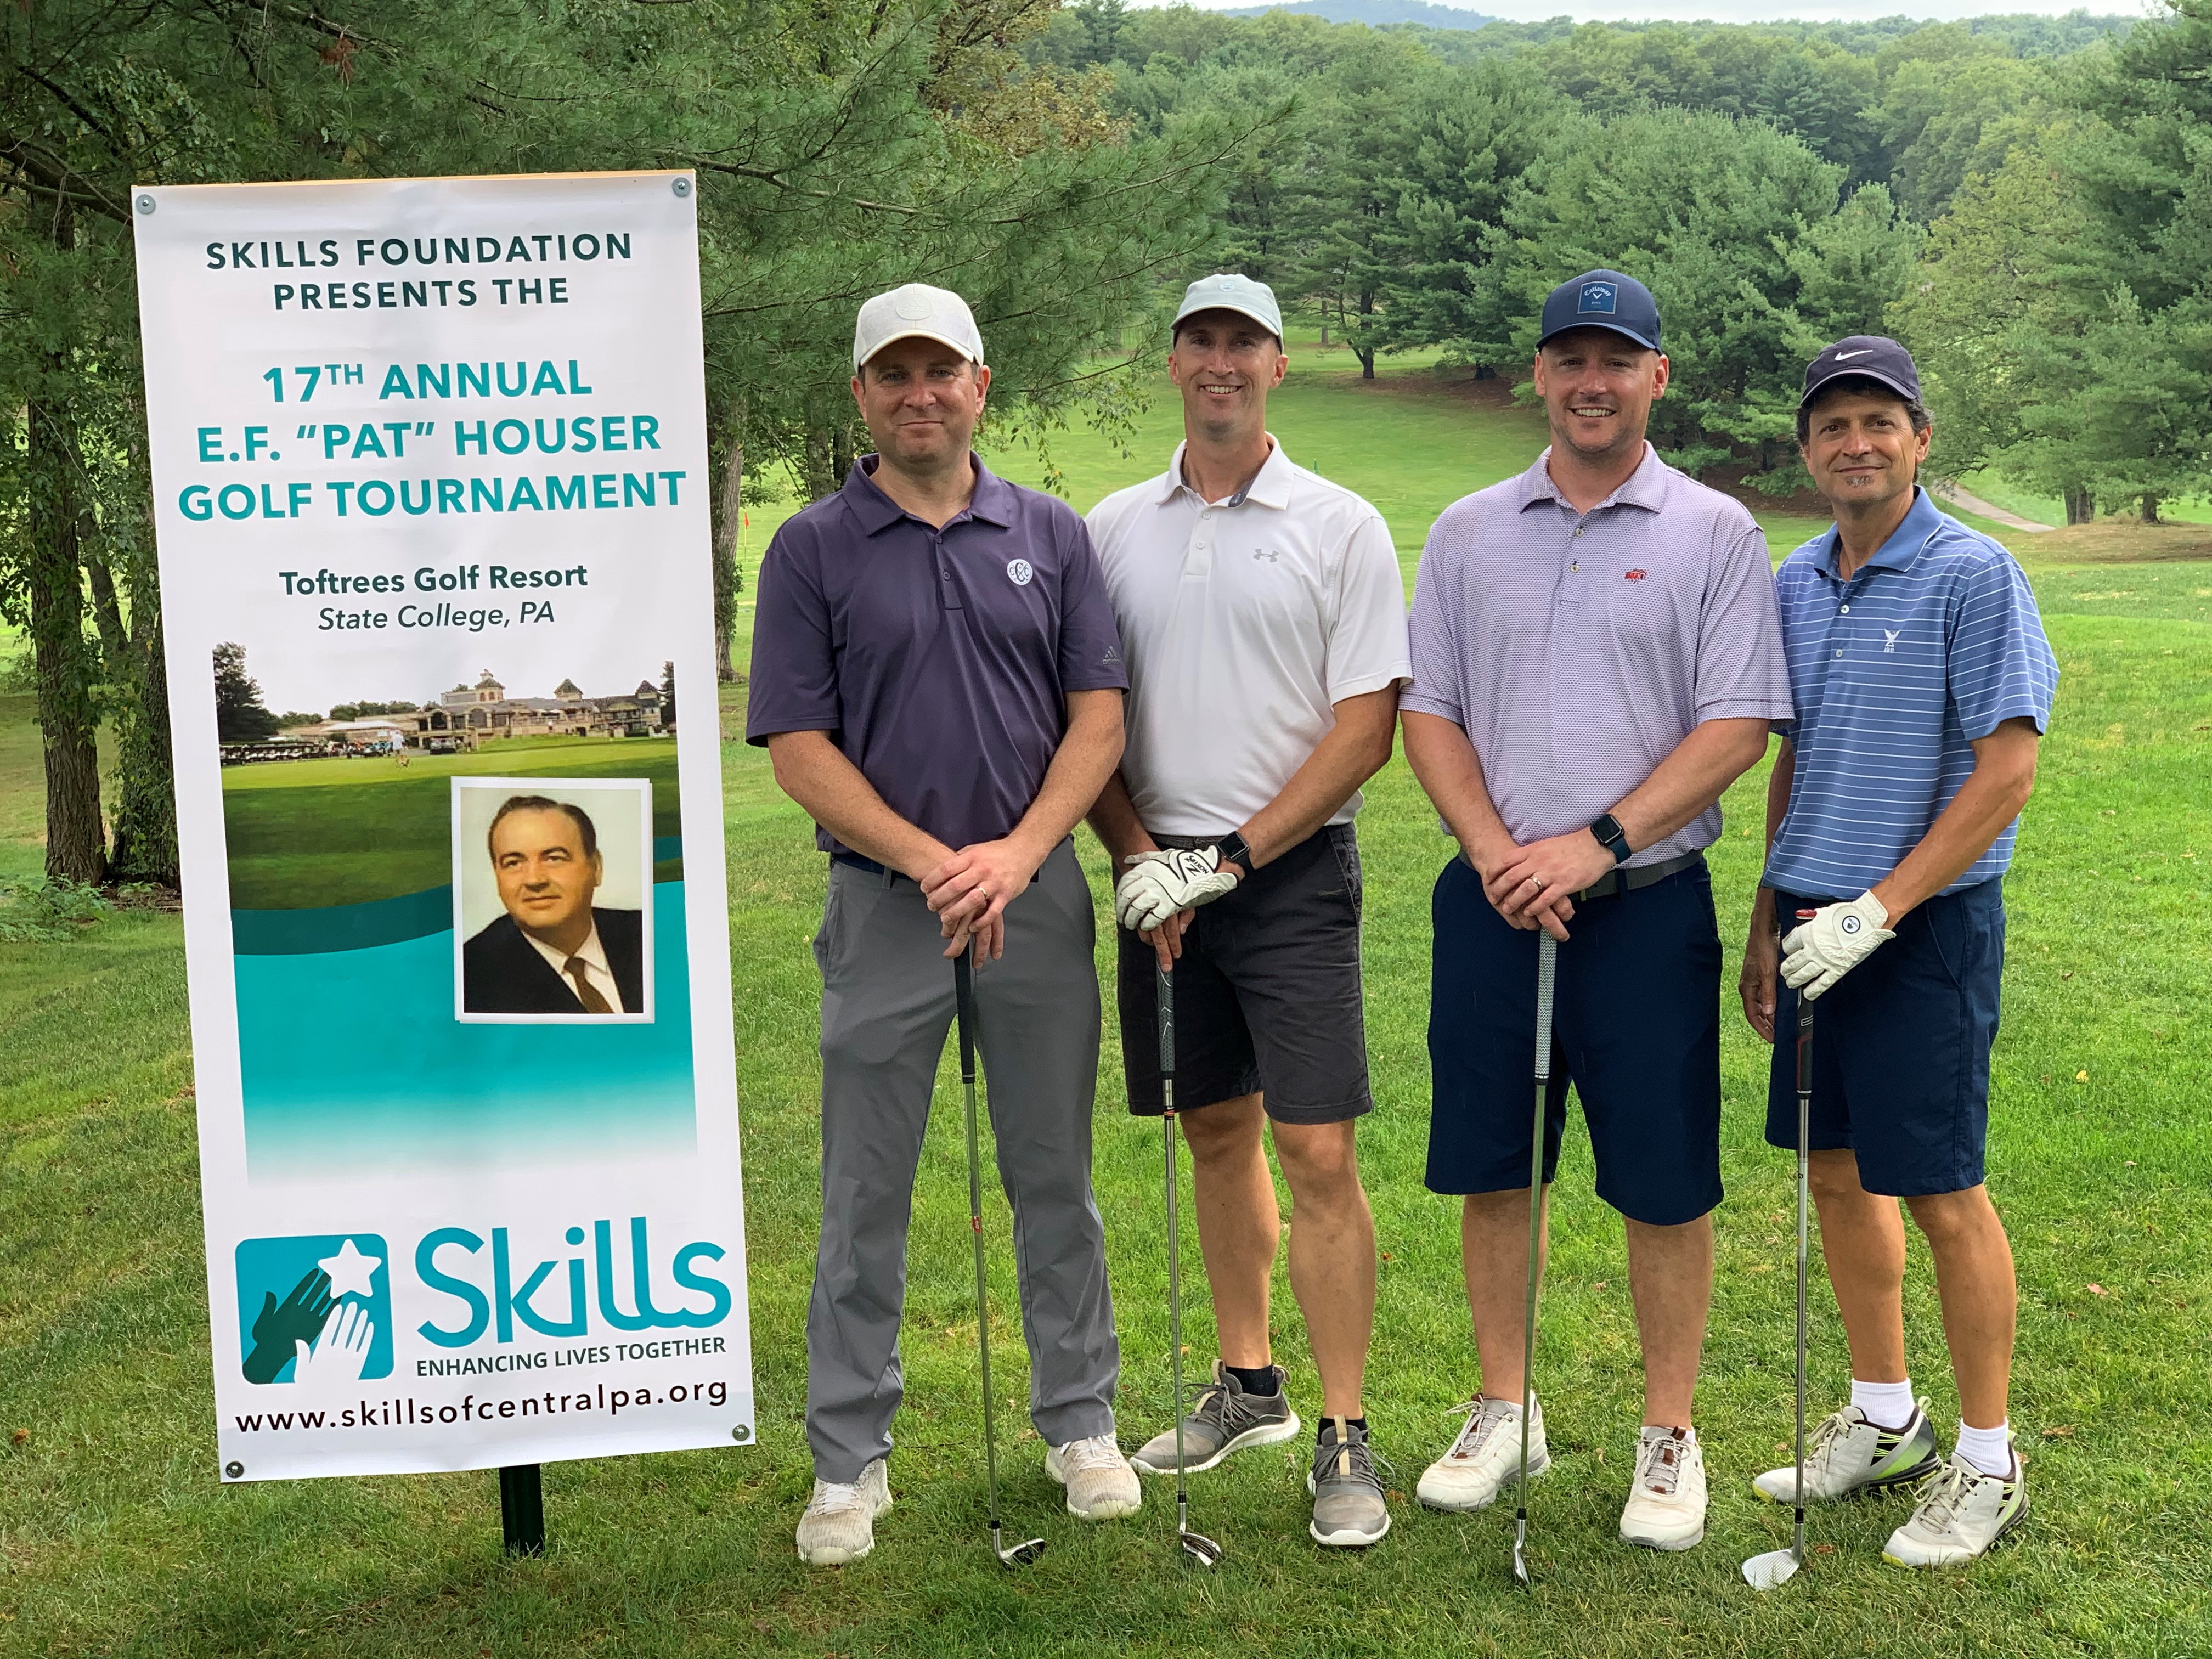 Skills Foundation’s 17th Annual E.F. “Pat” Houser Golf Tournament